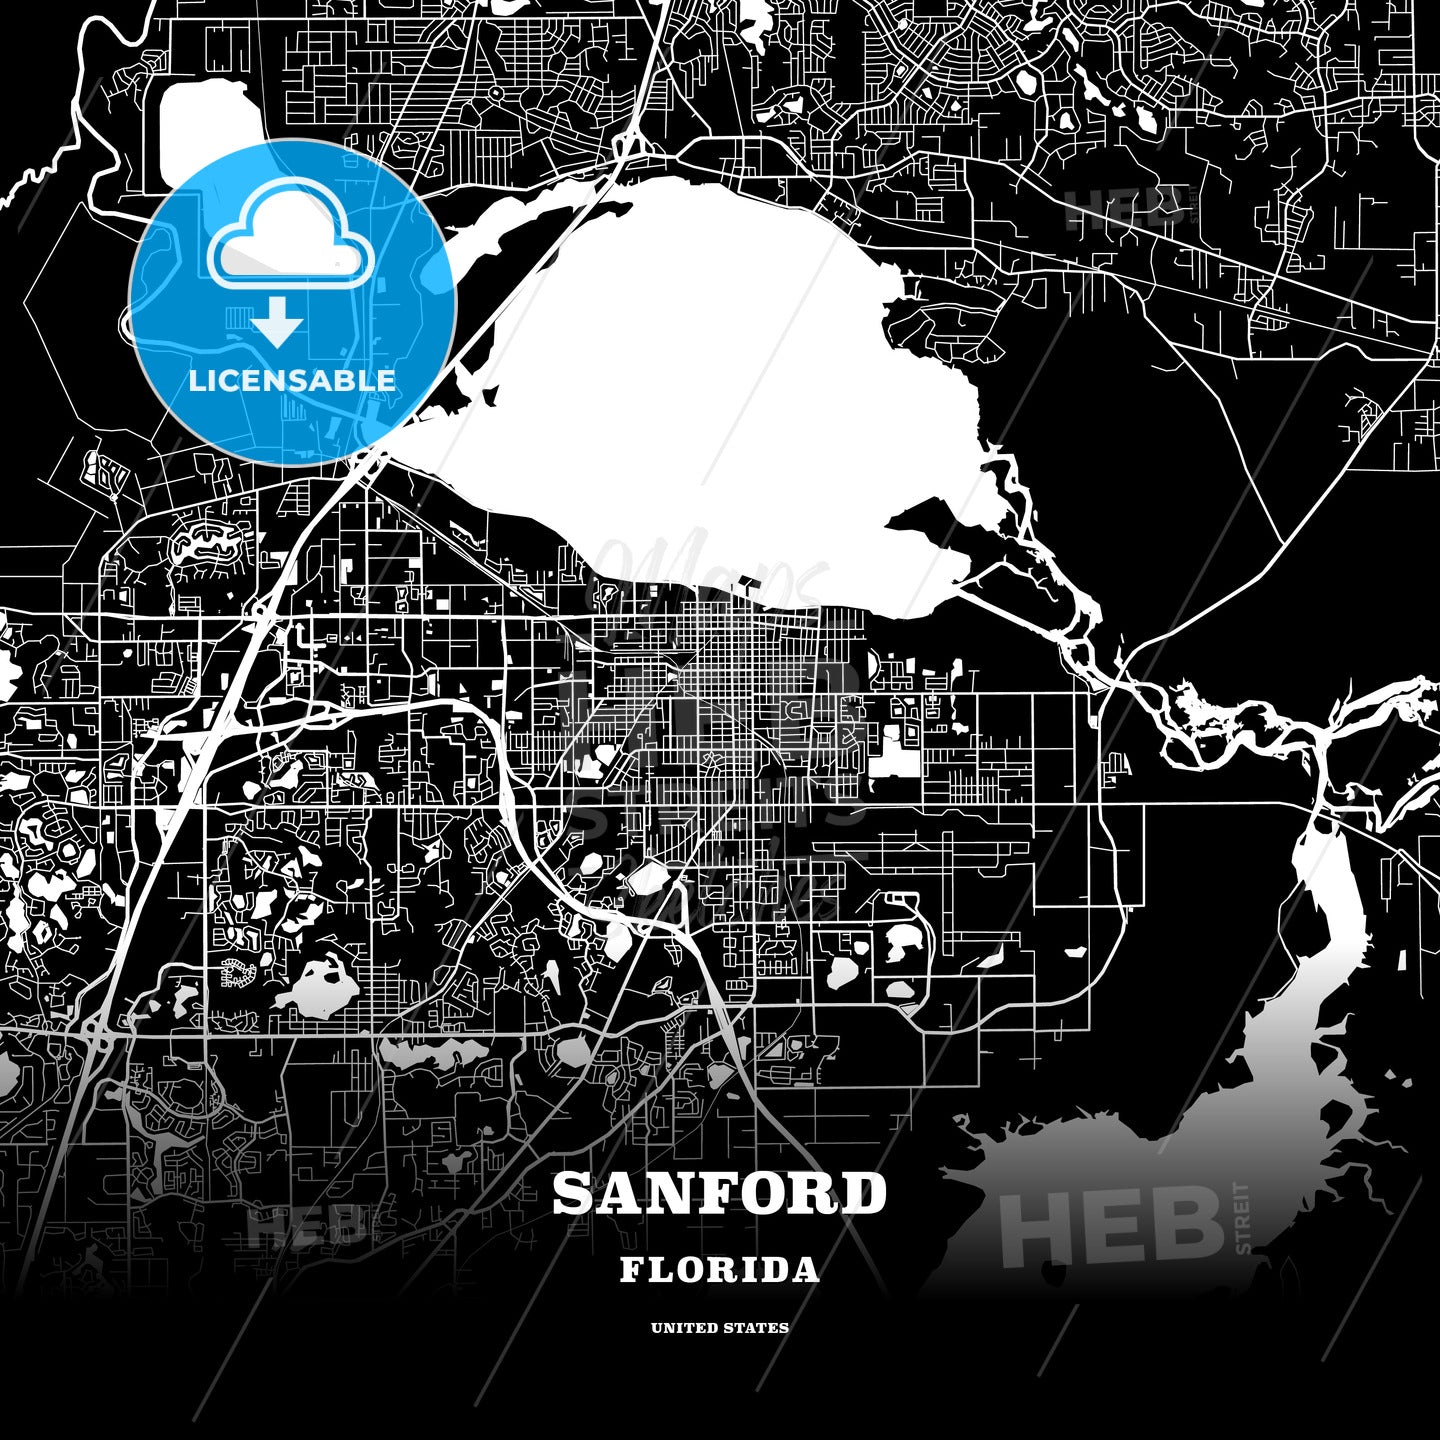 Sanford, Florida, USA map